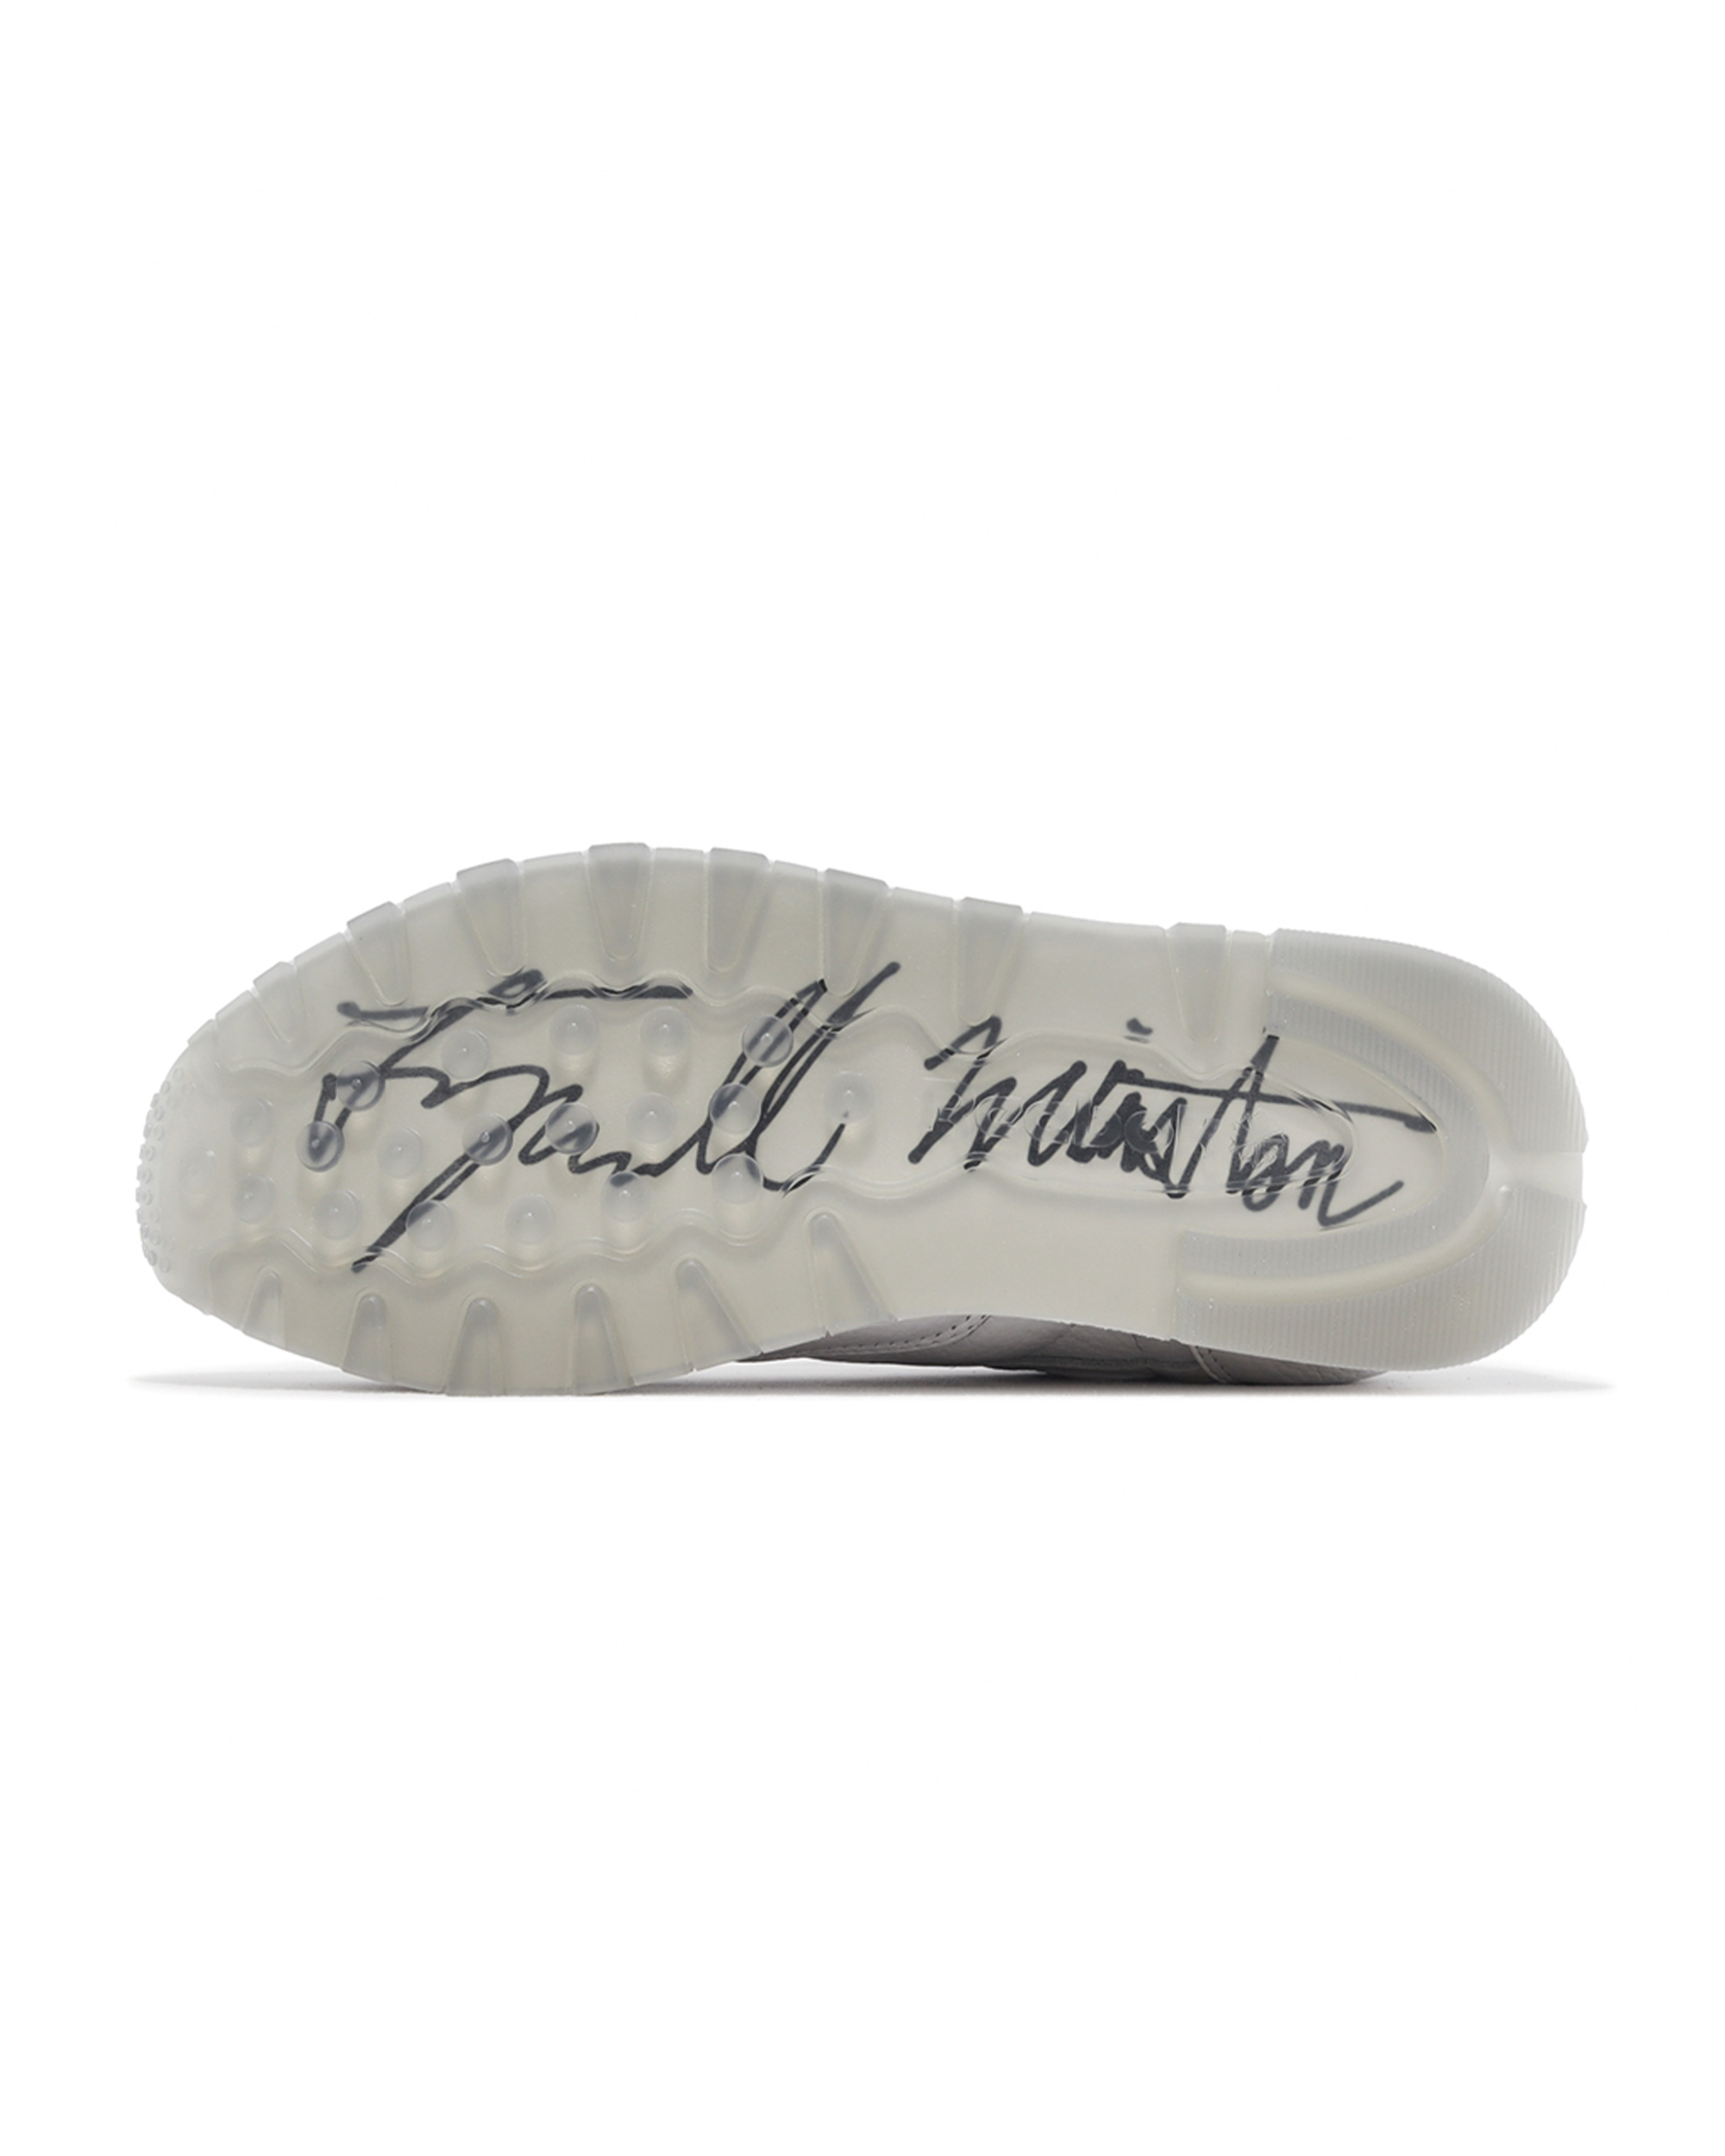 Tyrell Winston Classic Leather - White / Chalk / Grey